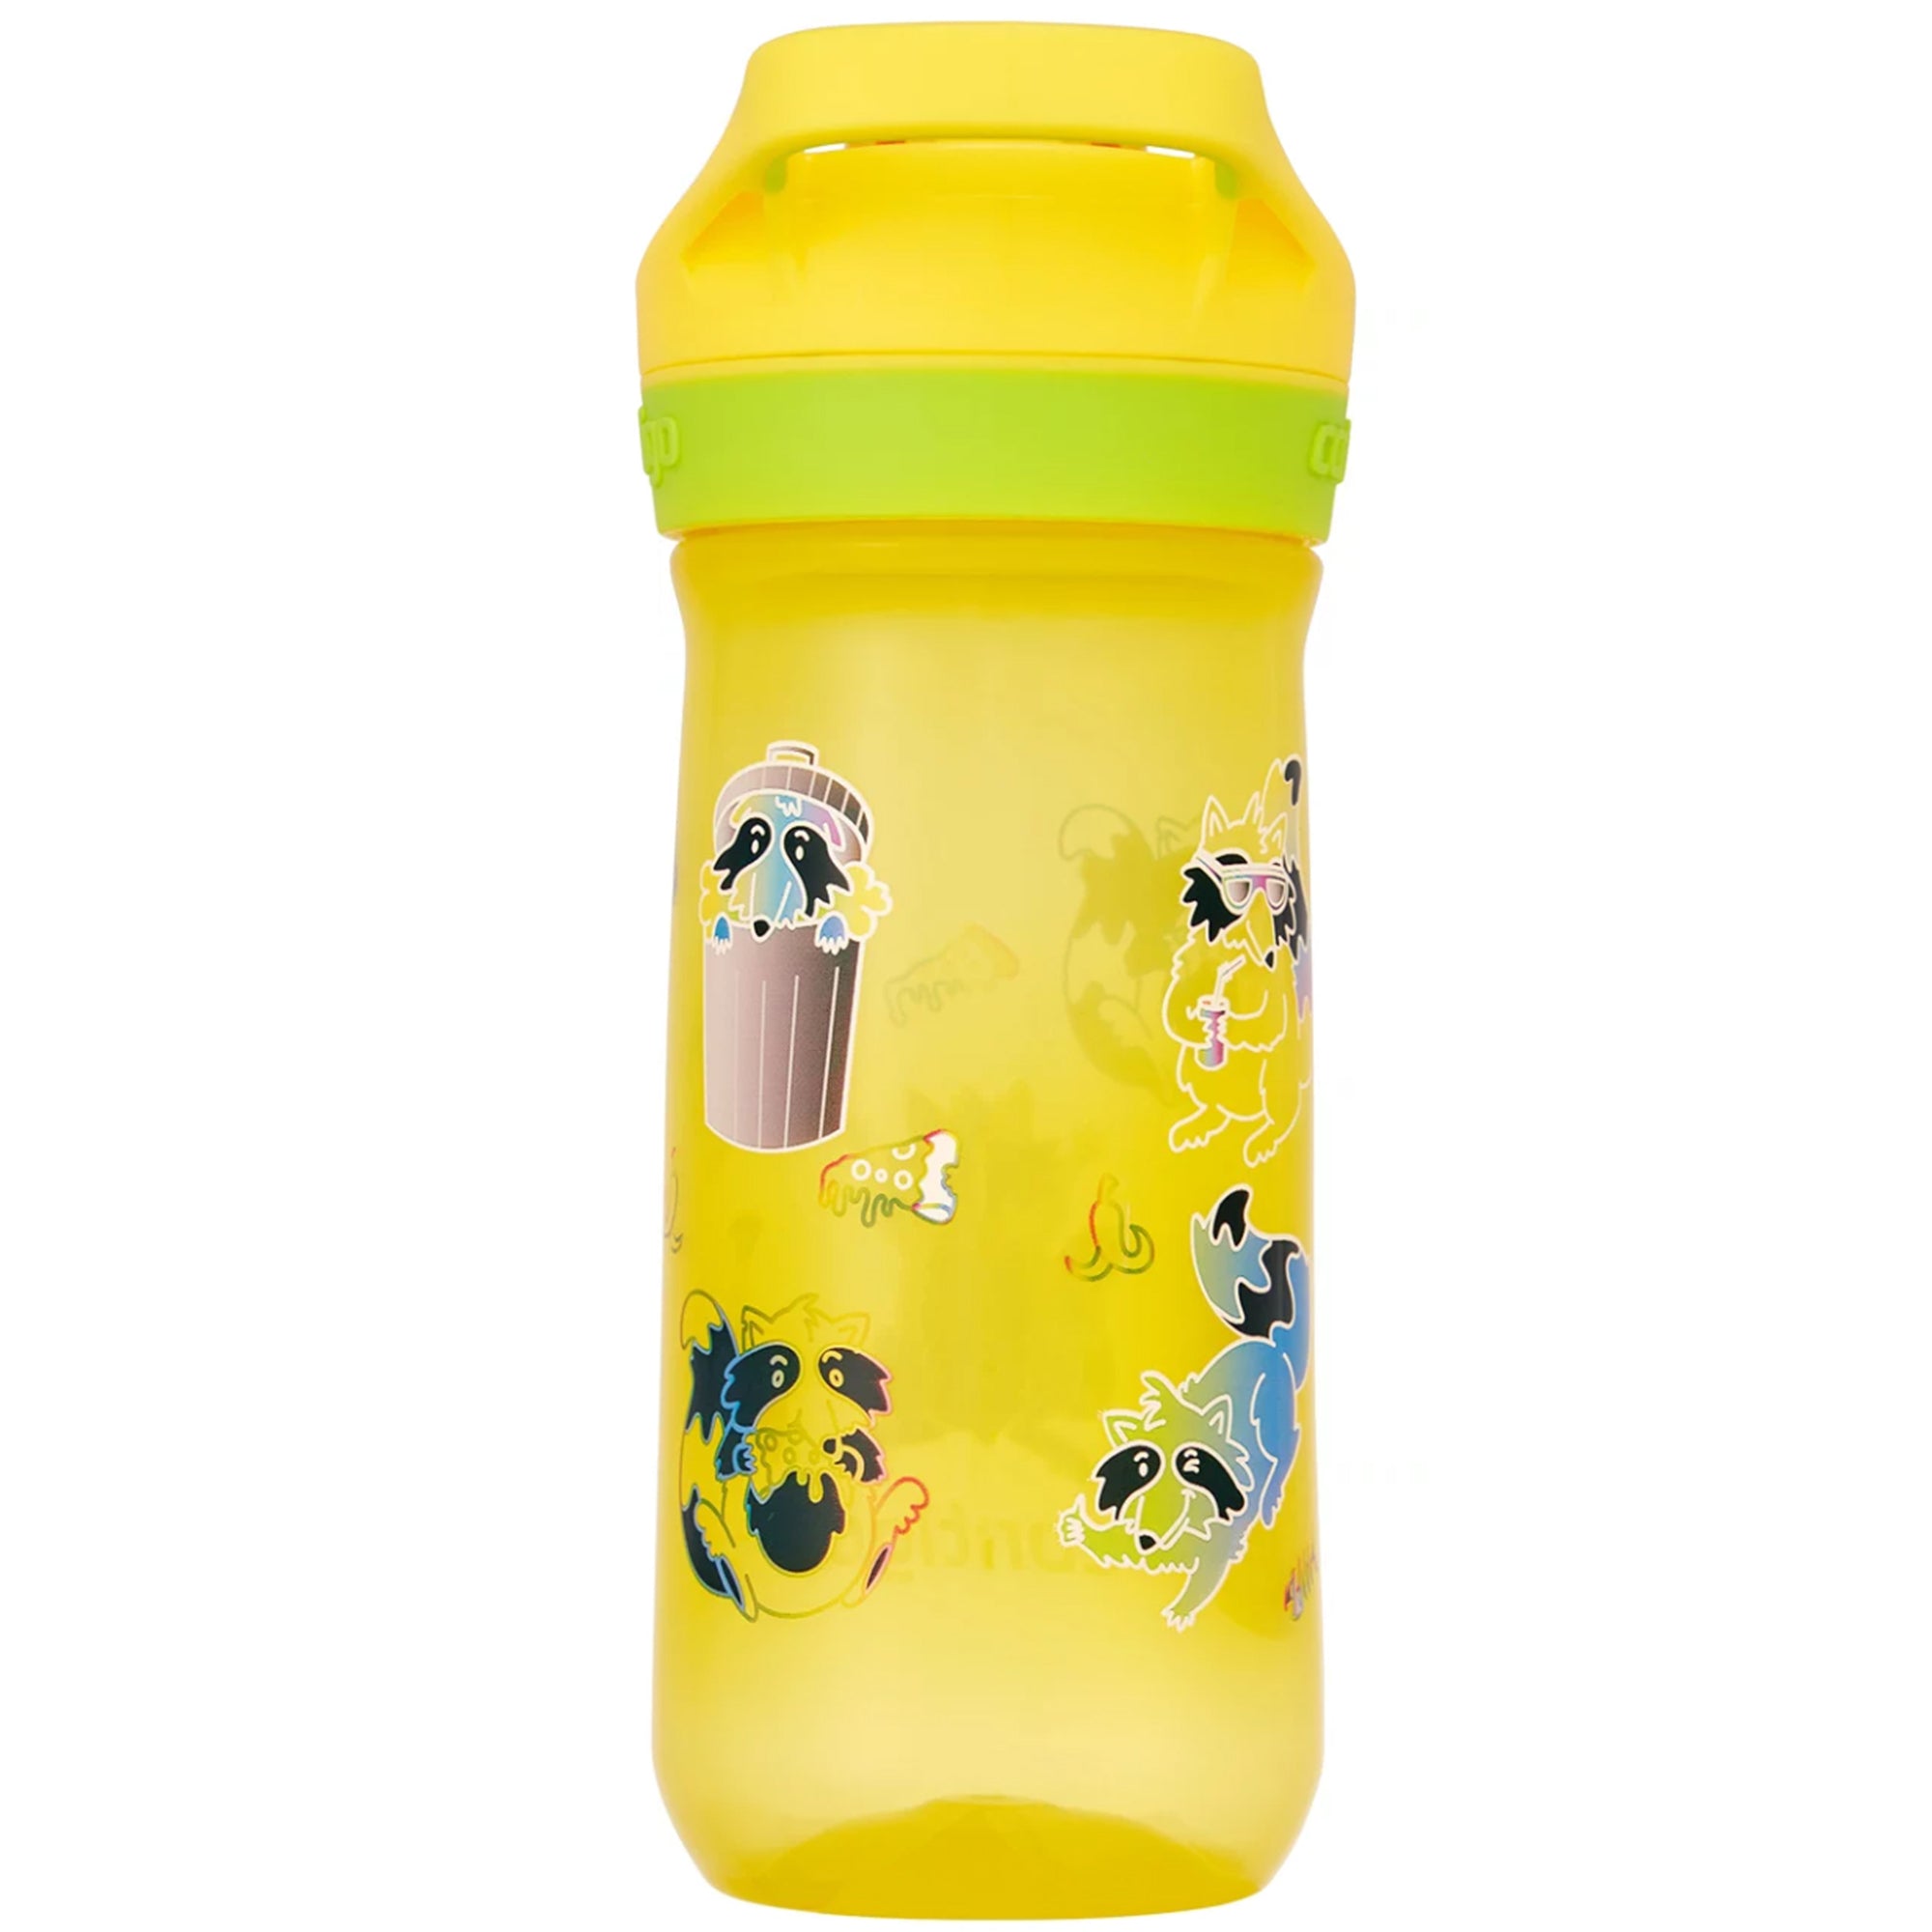 Contigo Kid's 14 oz. Jessie Water Bottle with Autopop Lid Contigo